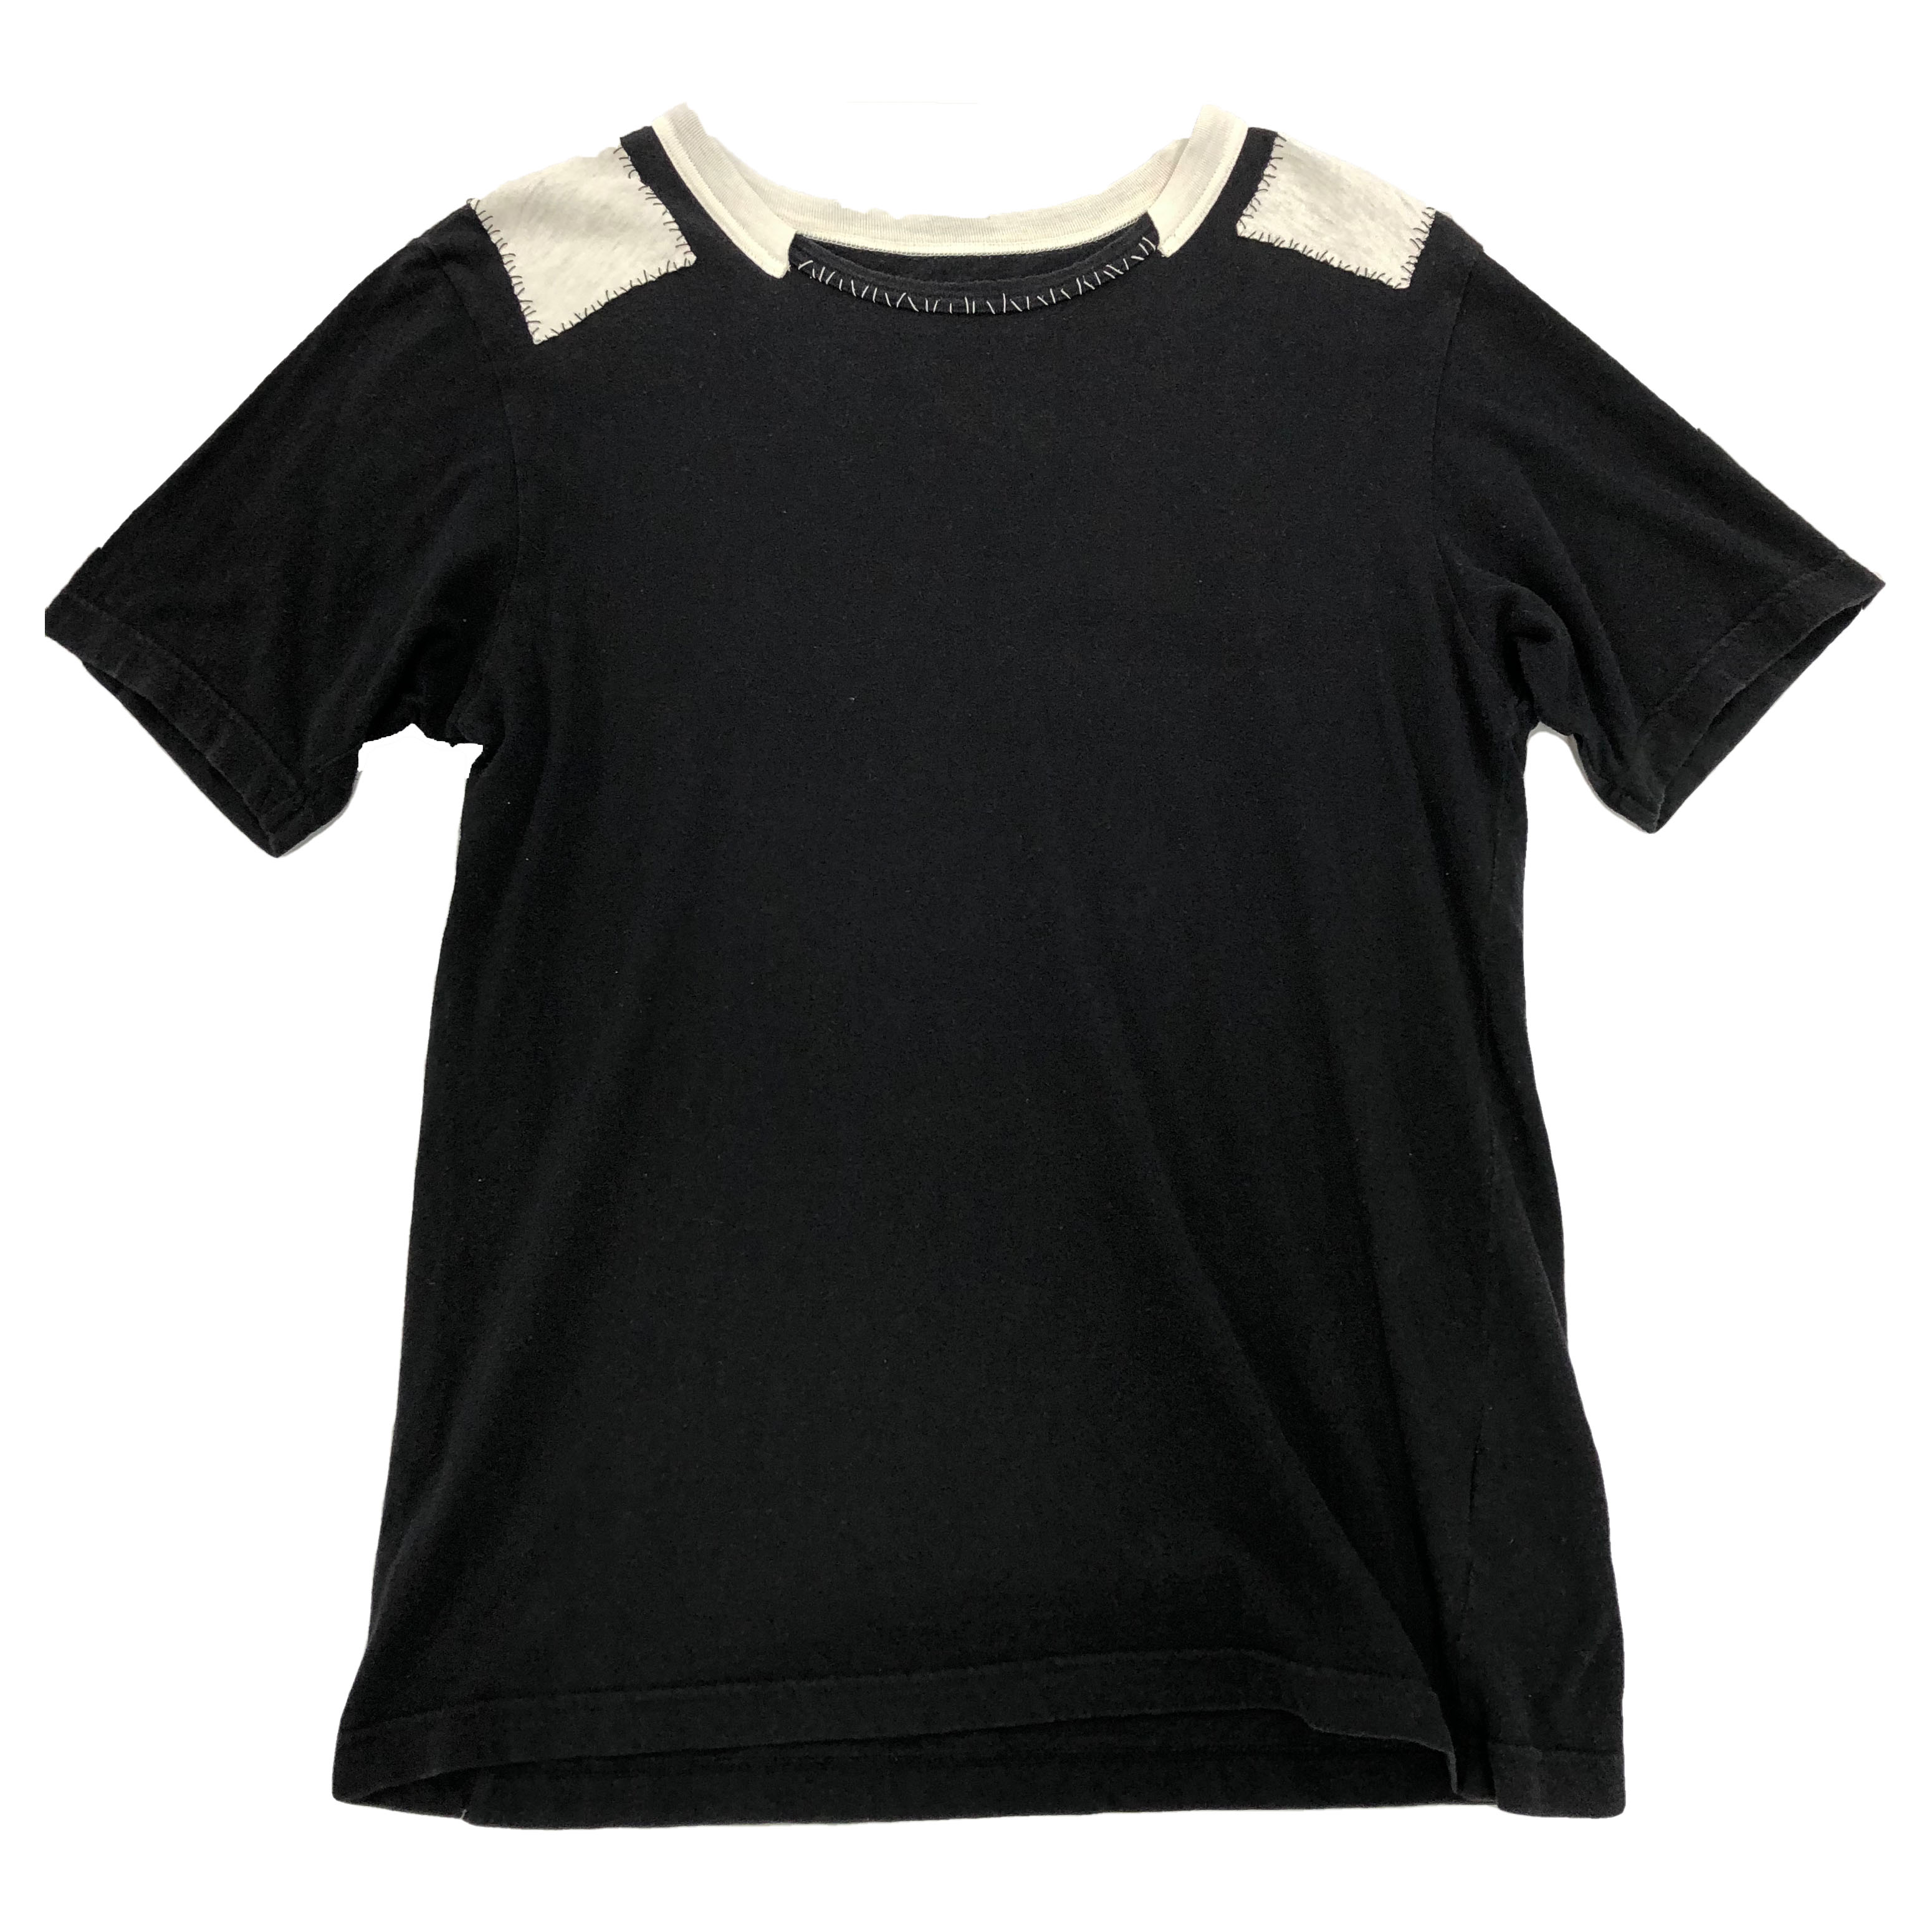 [Undercoverism] Stitched Tshirt - Size M